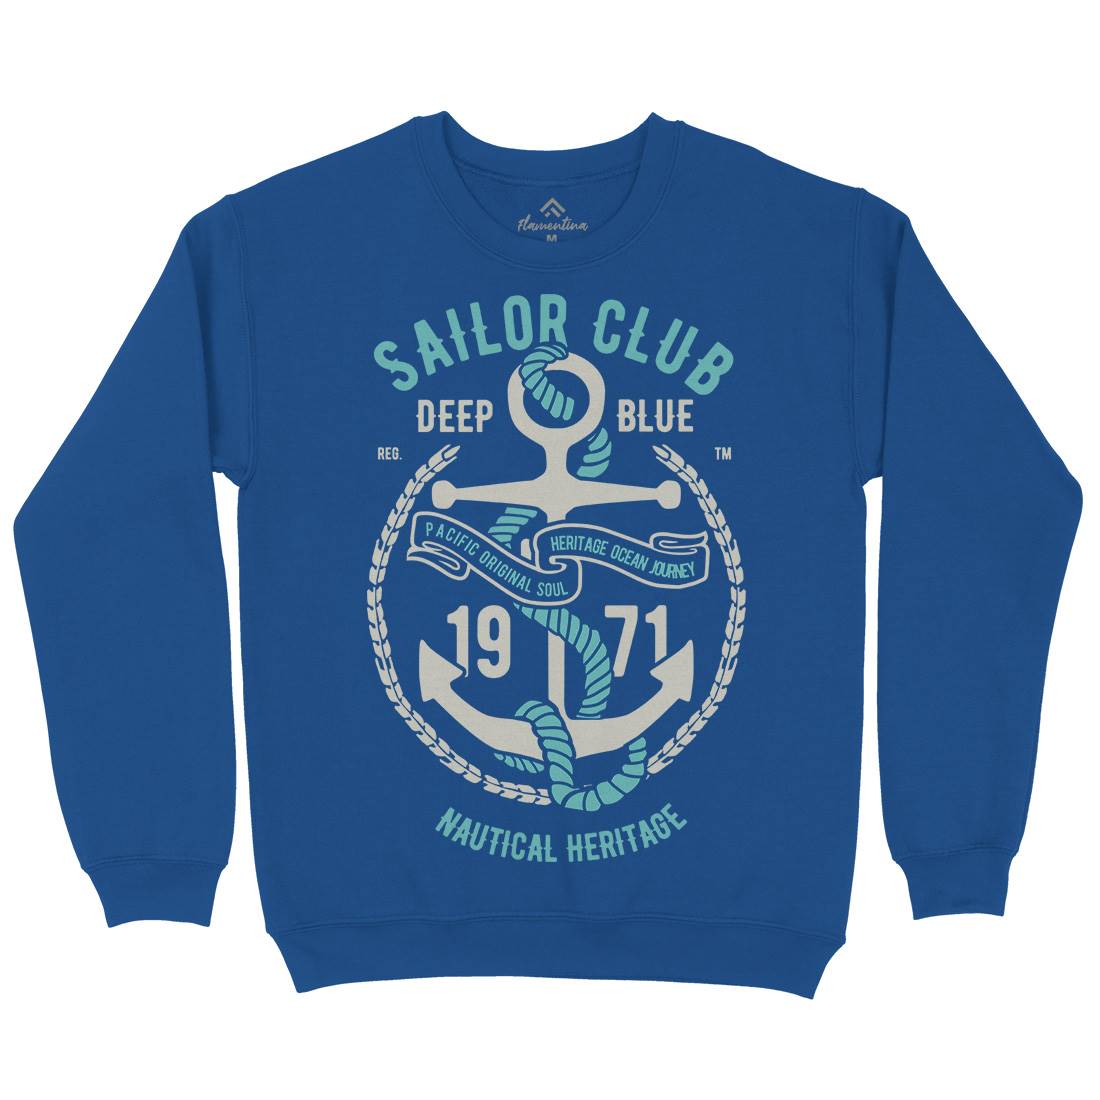 Sailor Club Kids Crew Neck Sweatshirt Navy B445